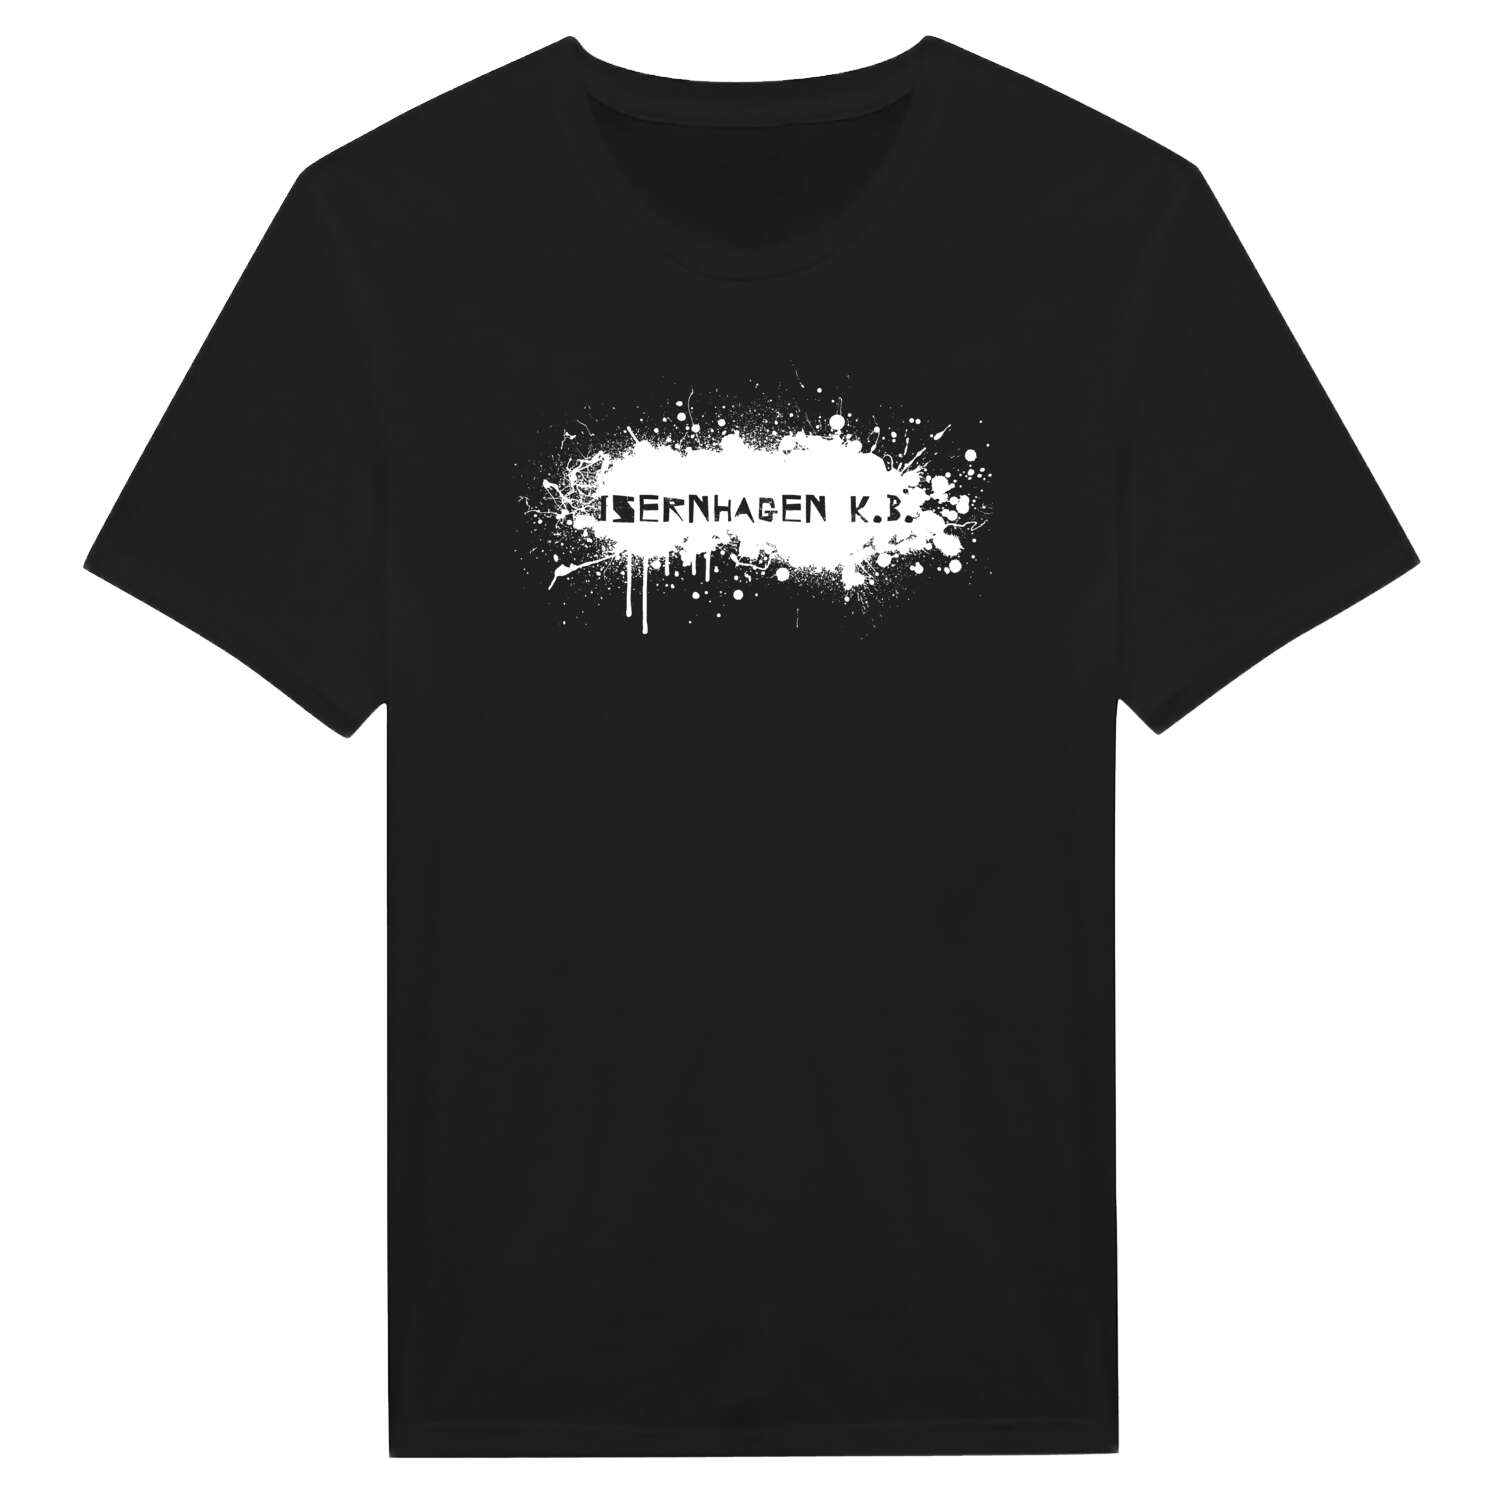 Isernhagen K.B. T-Shirt »Paint Splash Punk«